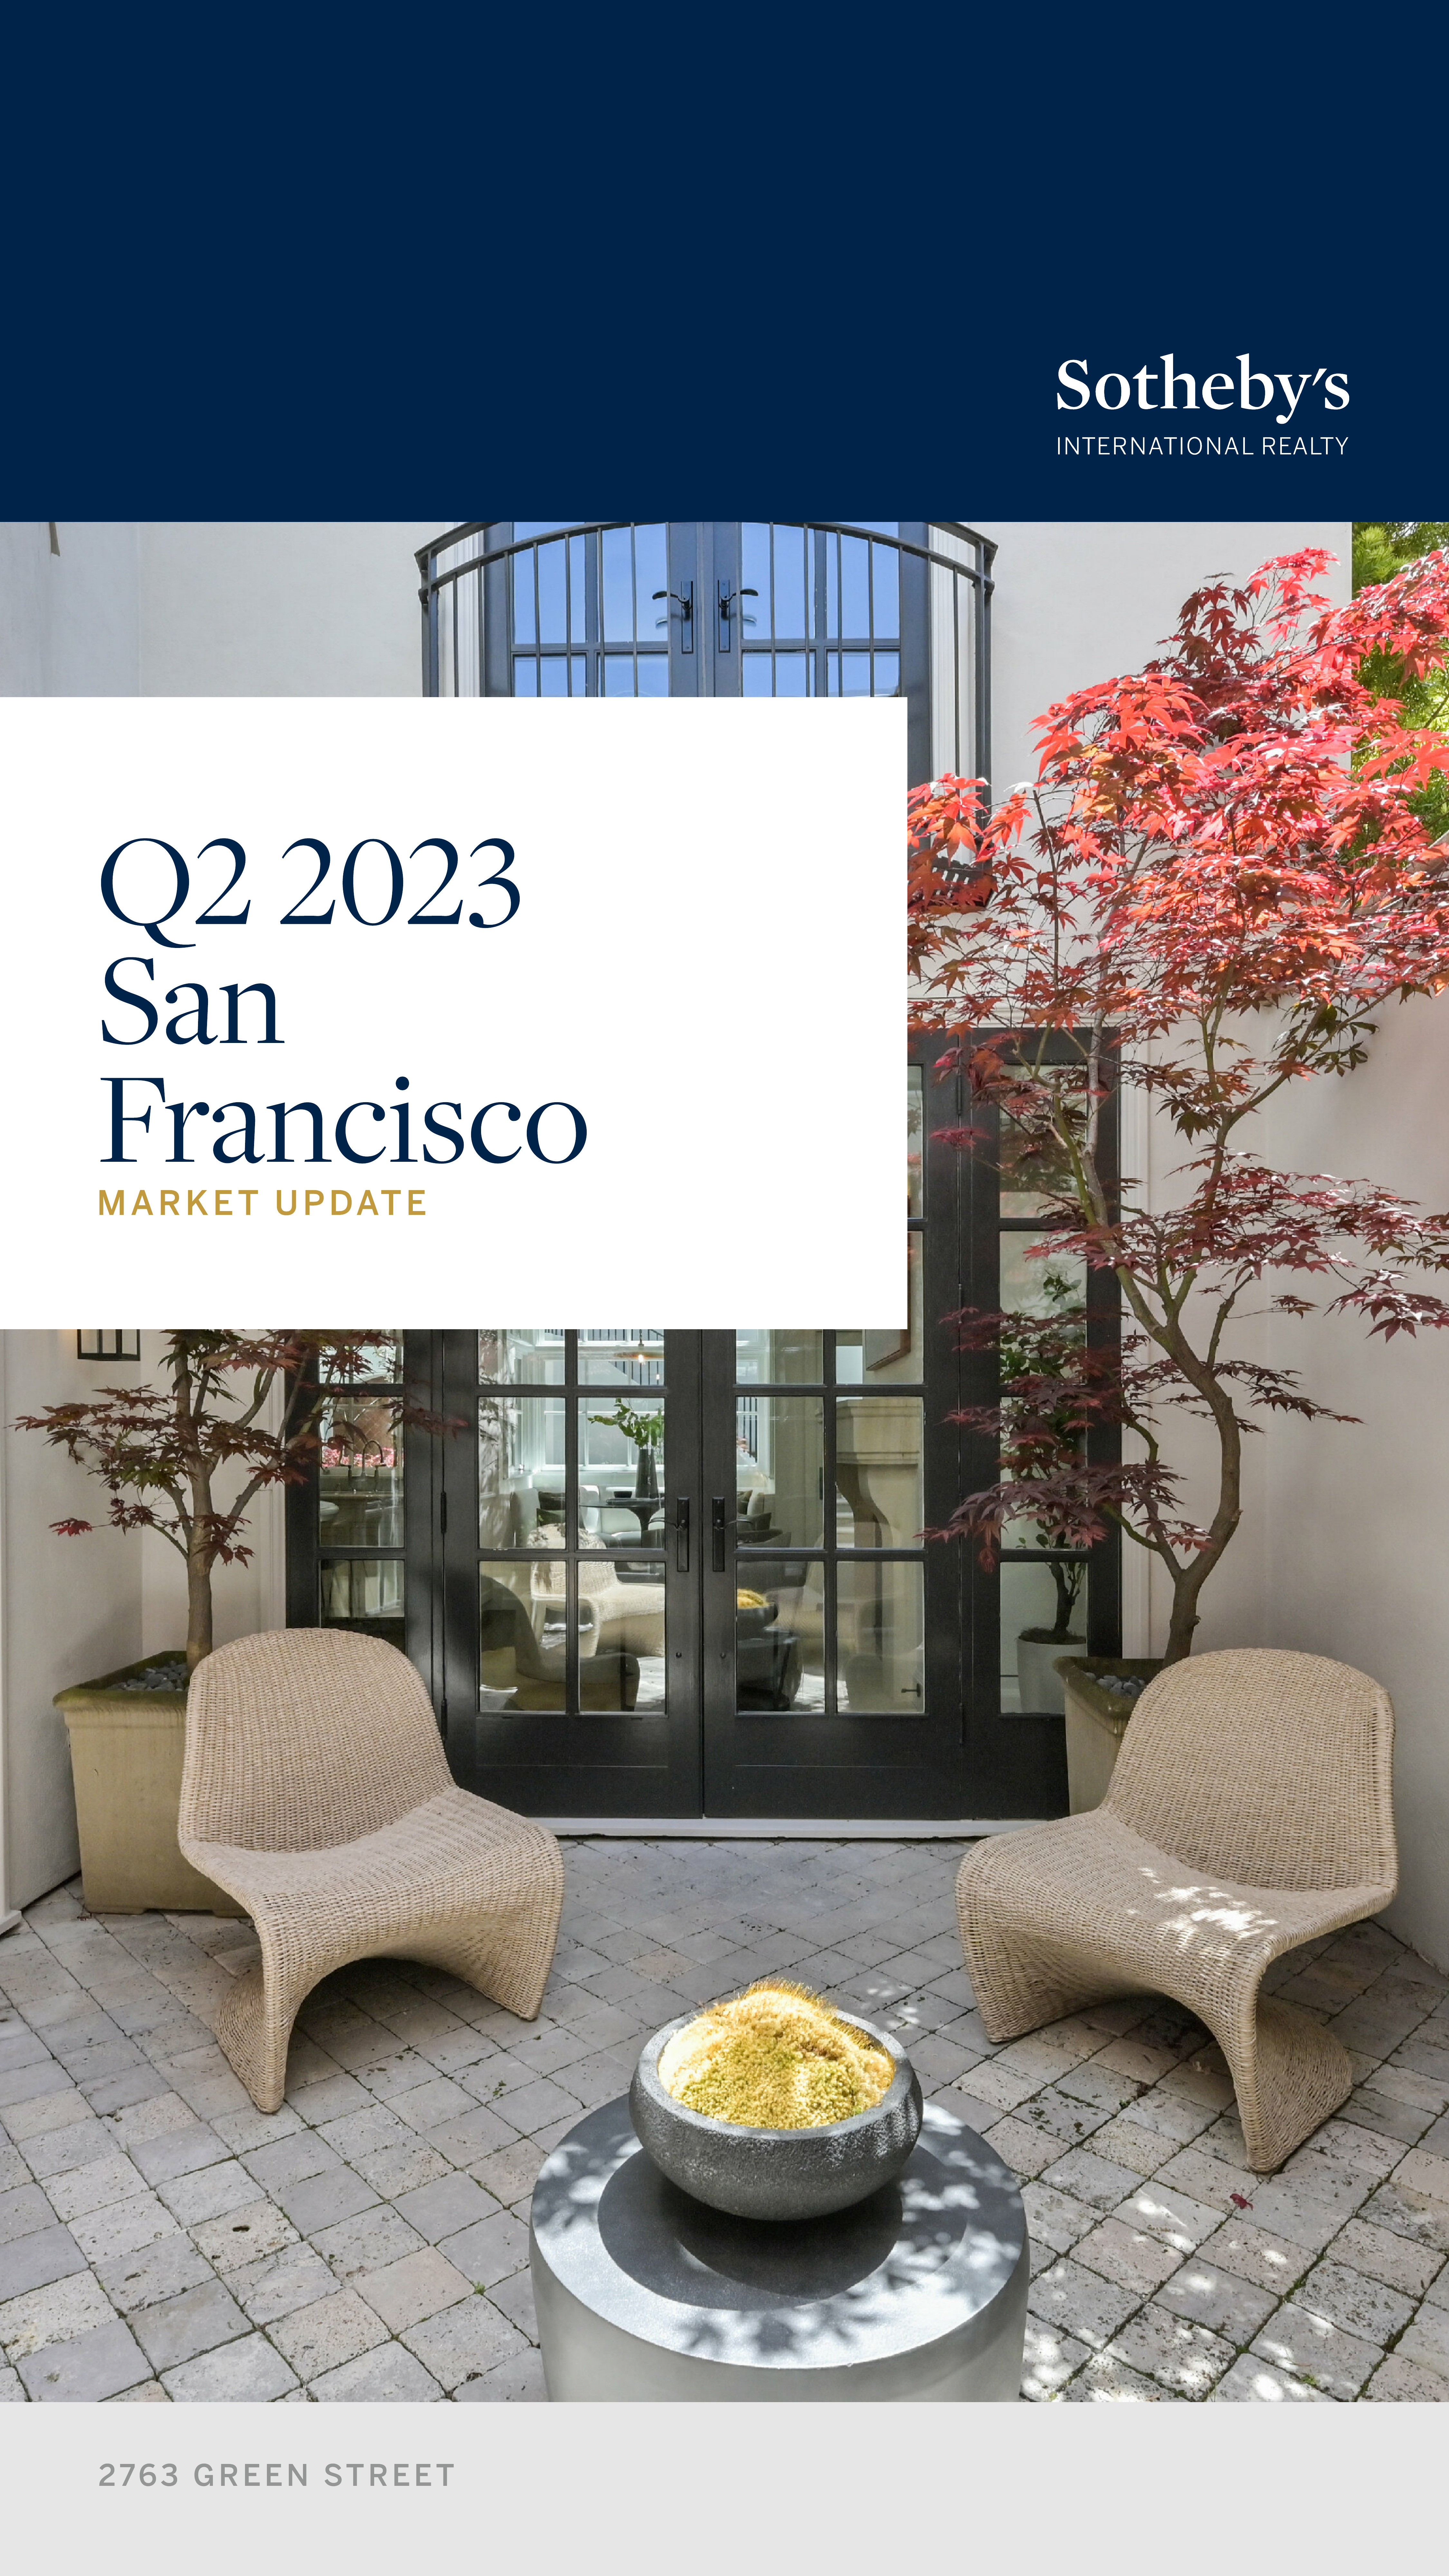 EXPLORE THE Q2 2023 SAN FRANCISCO MARKET UPDATE